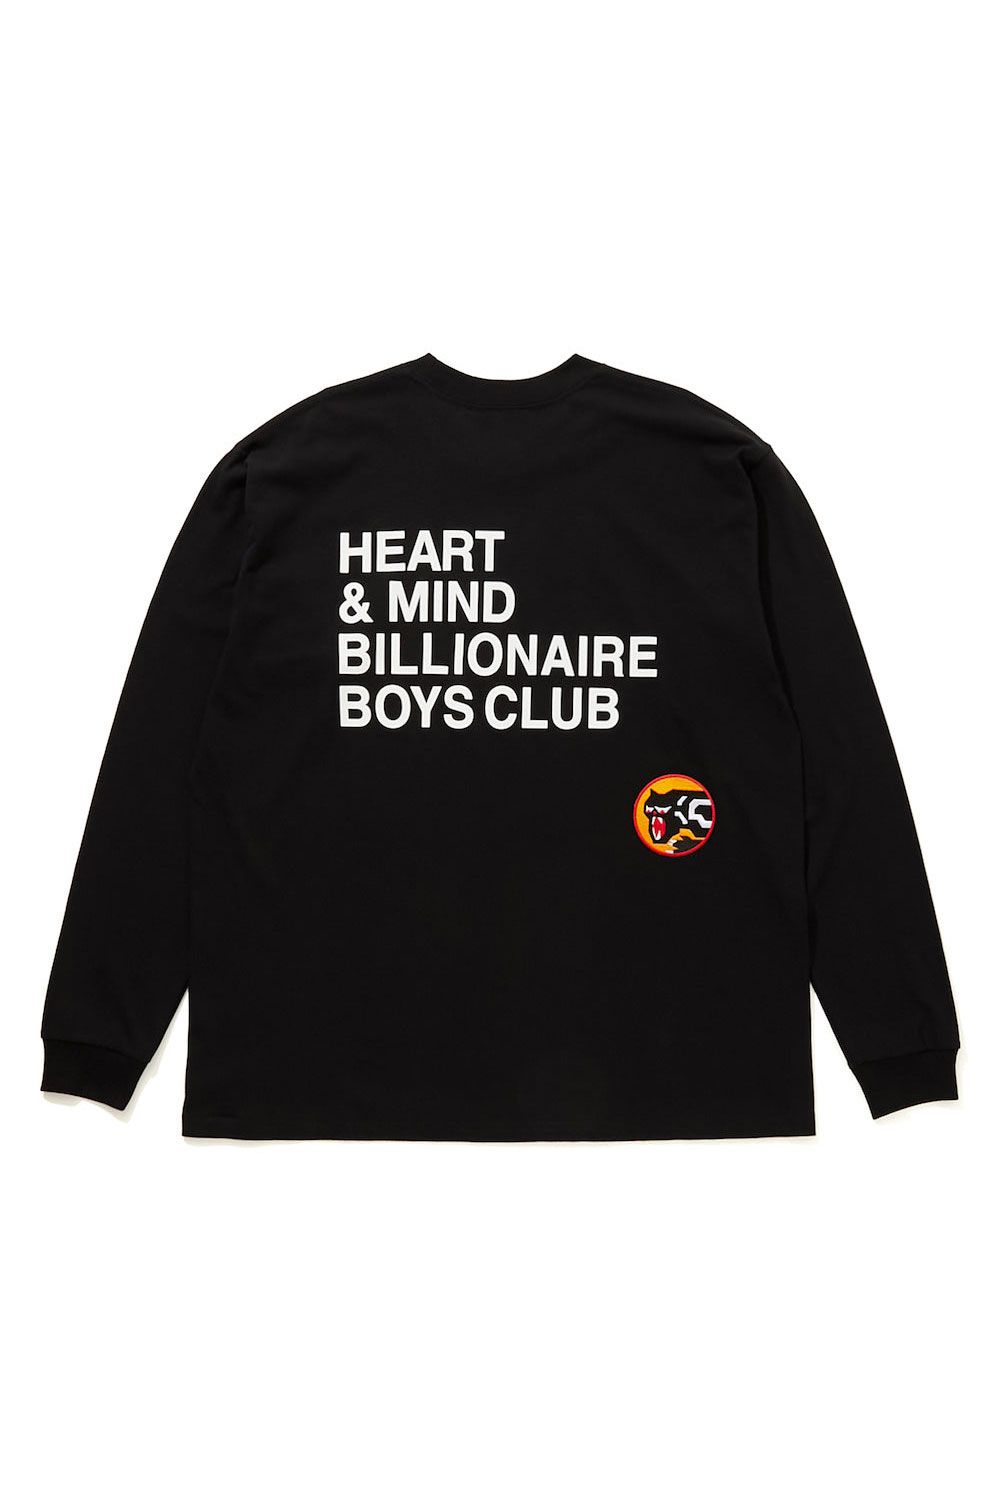 Billionaire Boys Club / Icecream - ビリオネアボーイズクラブ